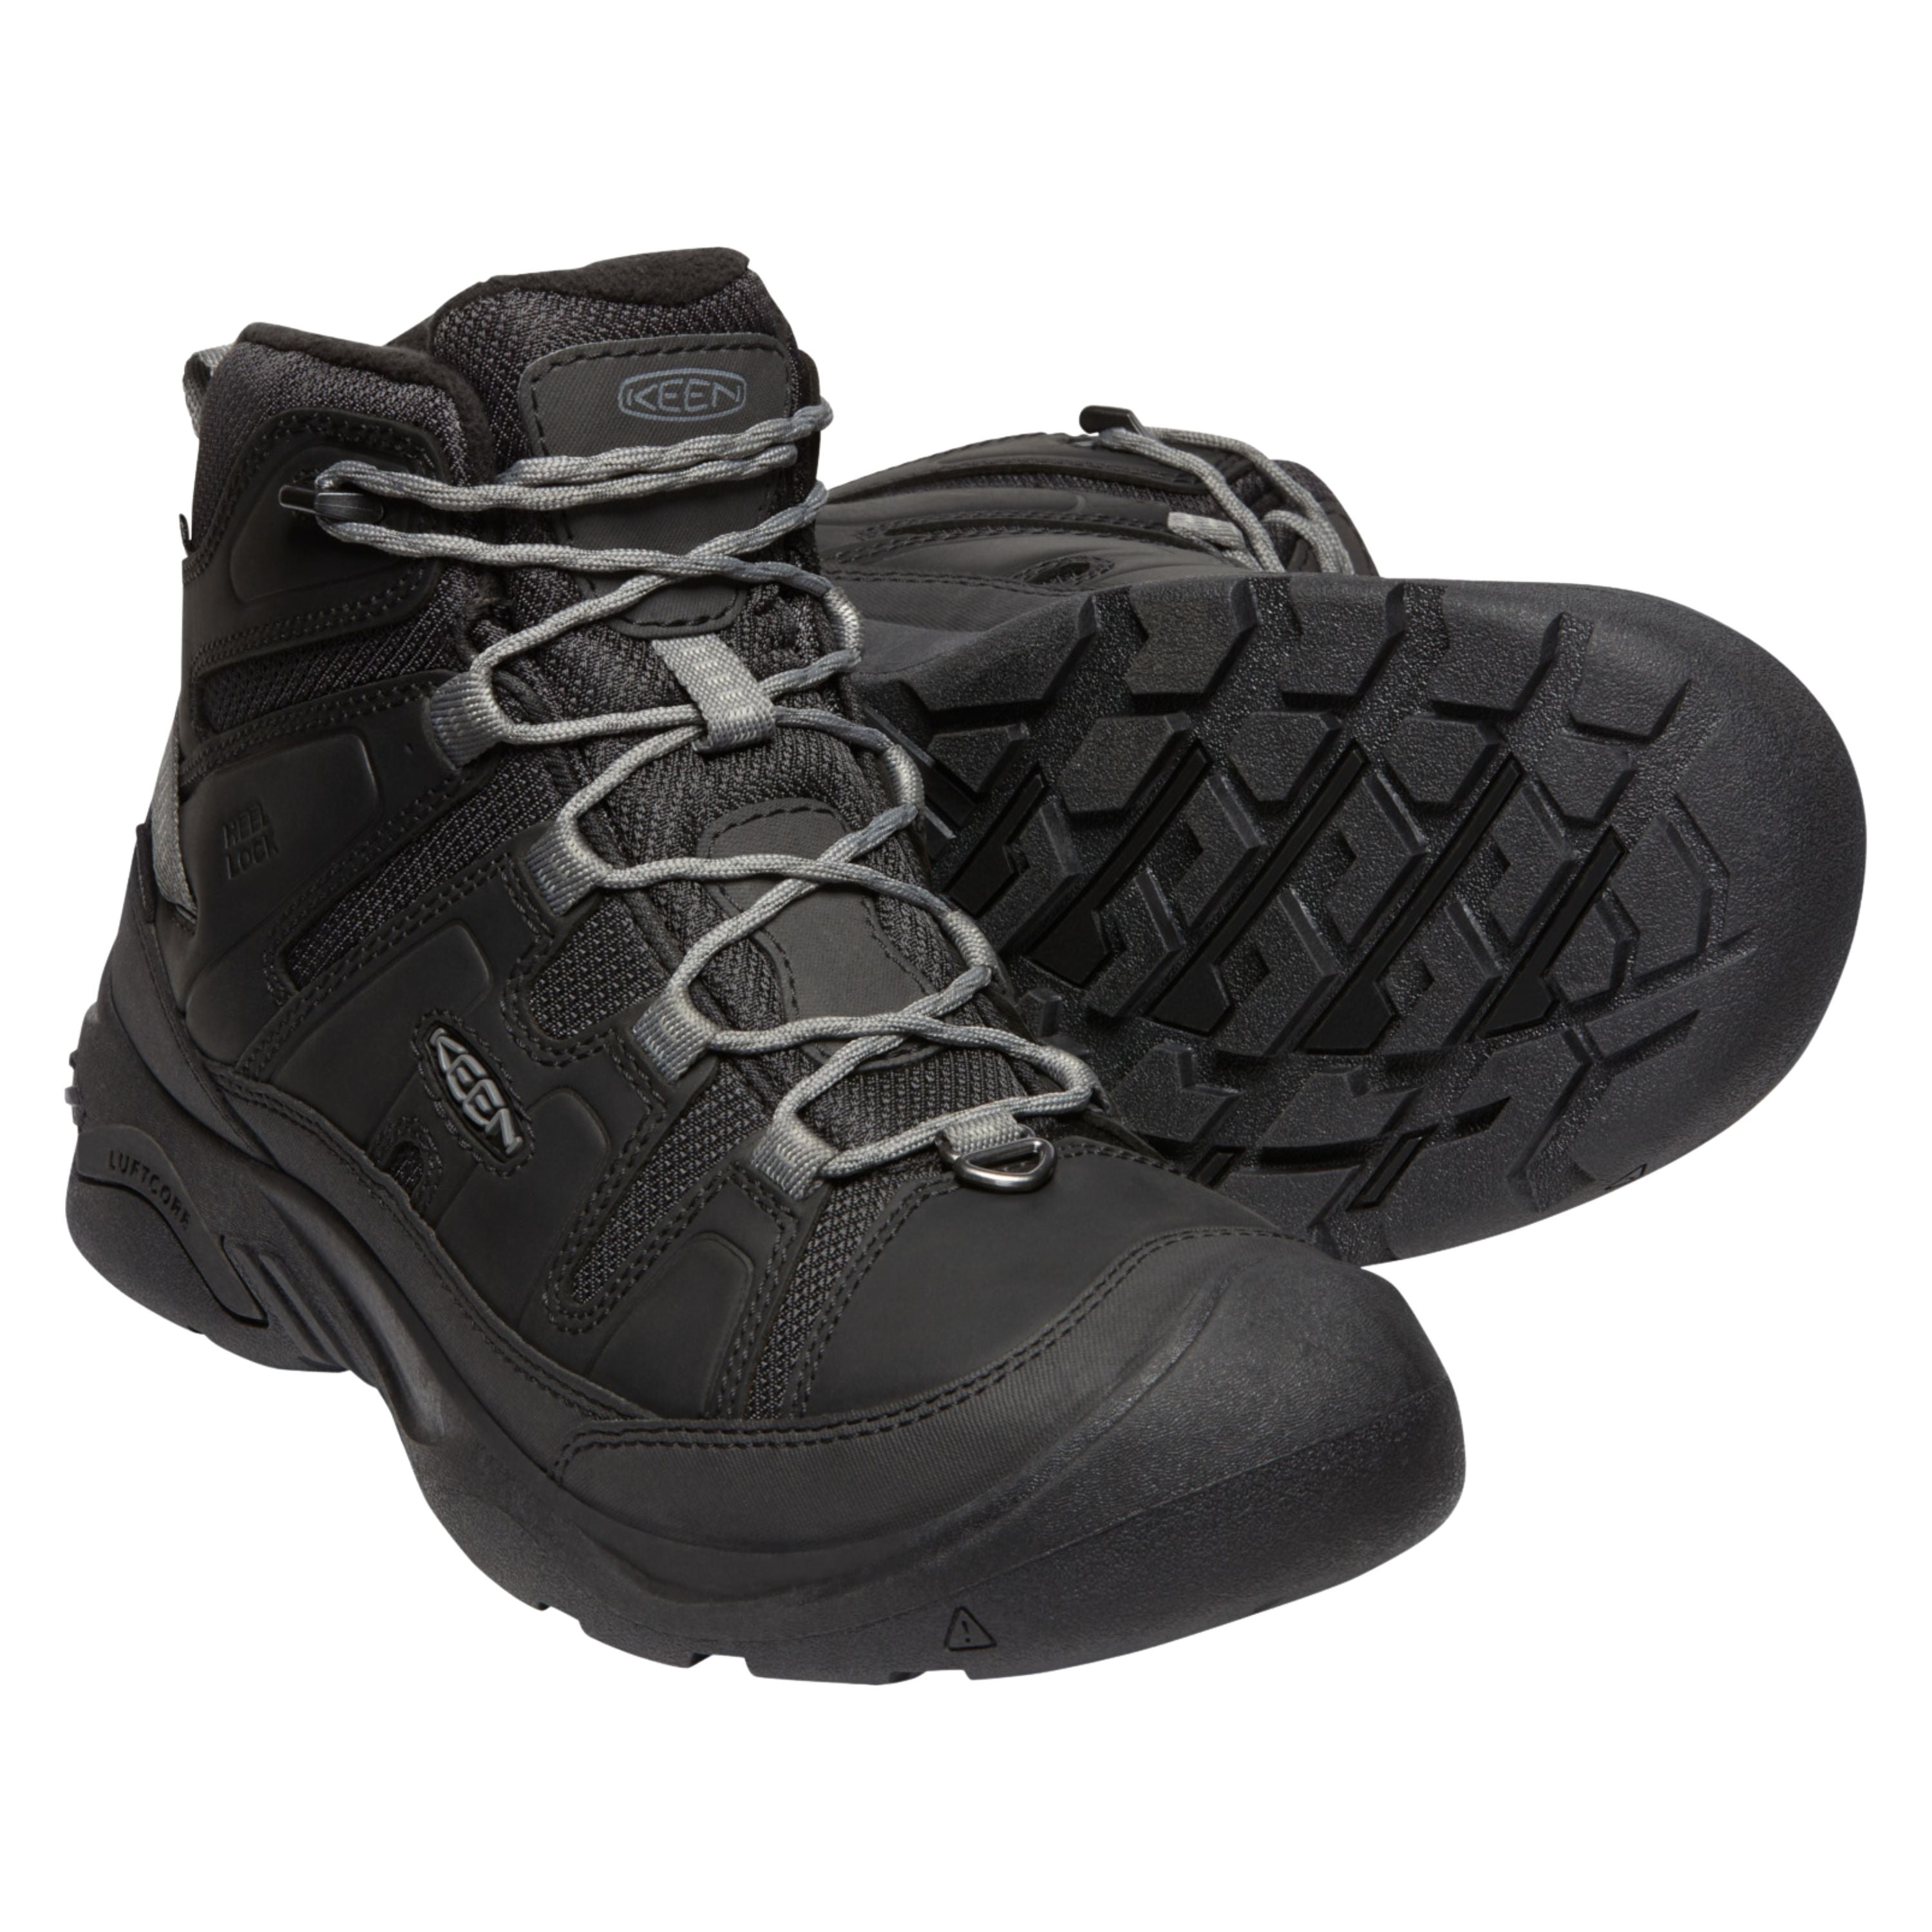 "Circadia MID Polar" Insulated hiking boots - Men's